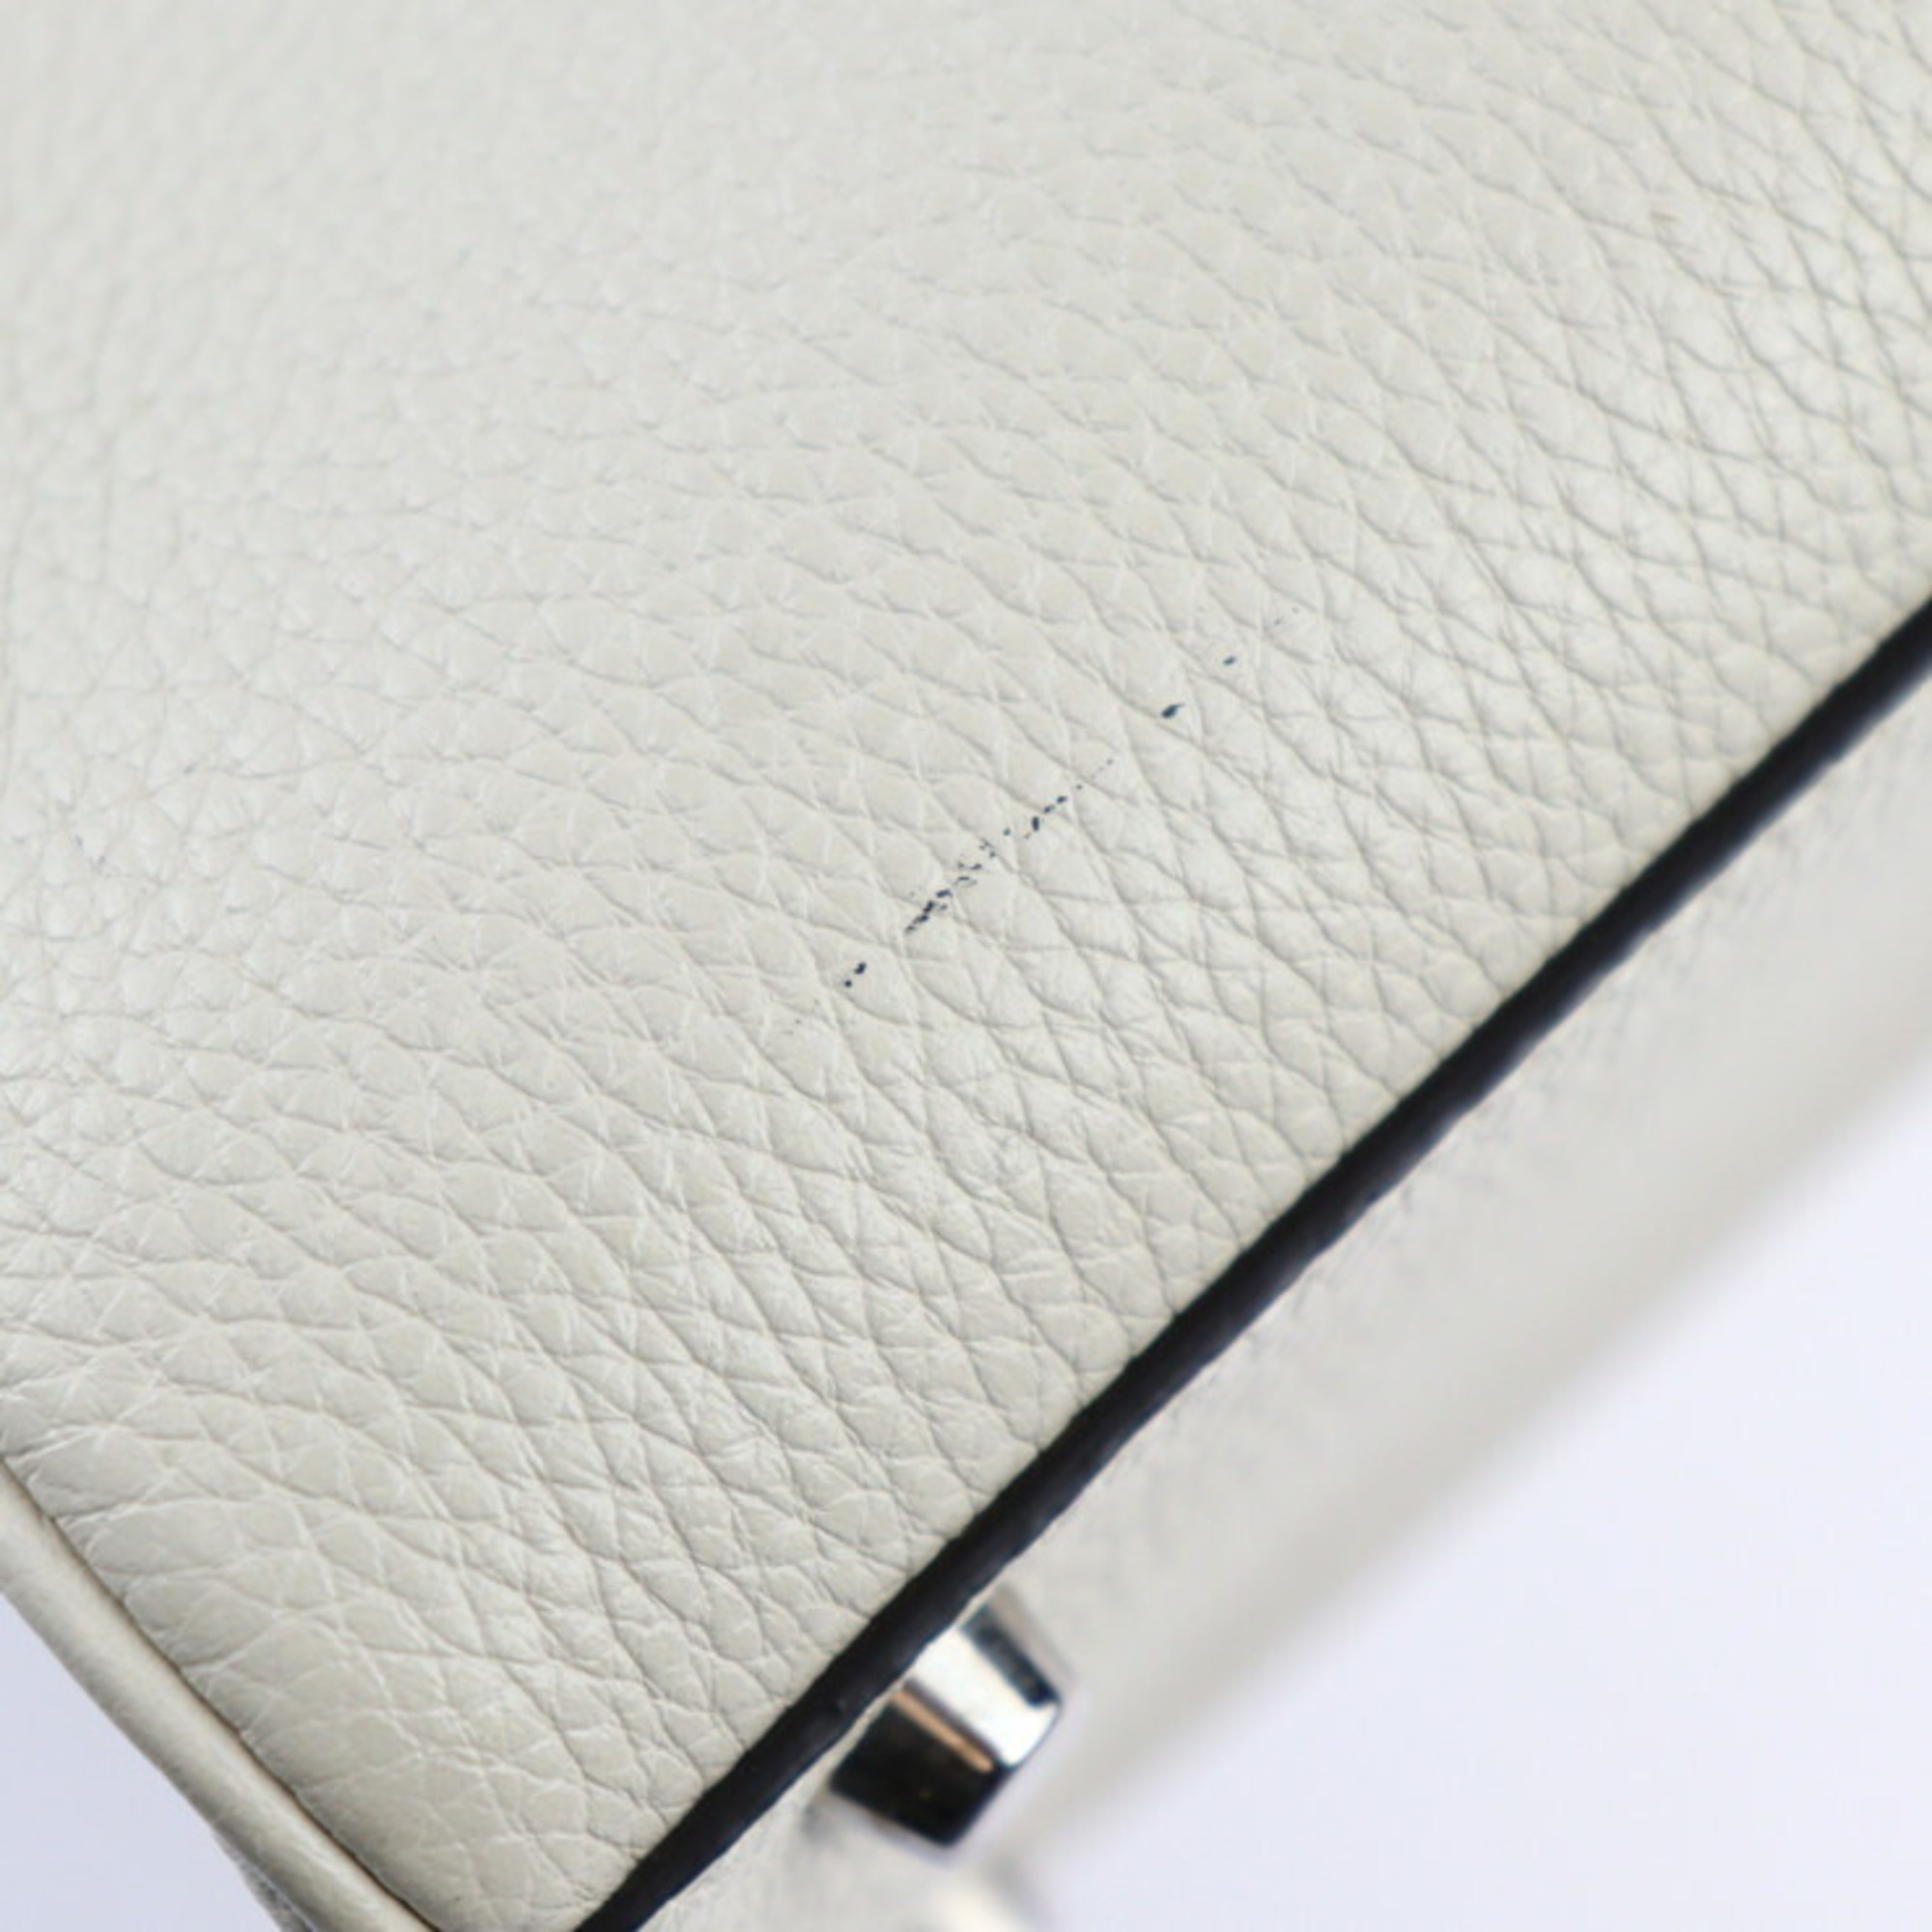 GUCCI Gucci Zumi Medium Top Handle Horsebit Handbag 564714 Leather Cream Silver Hardware Gold 2WAY Shoulder Bag